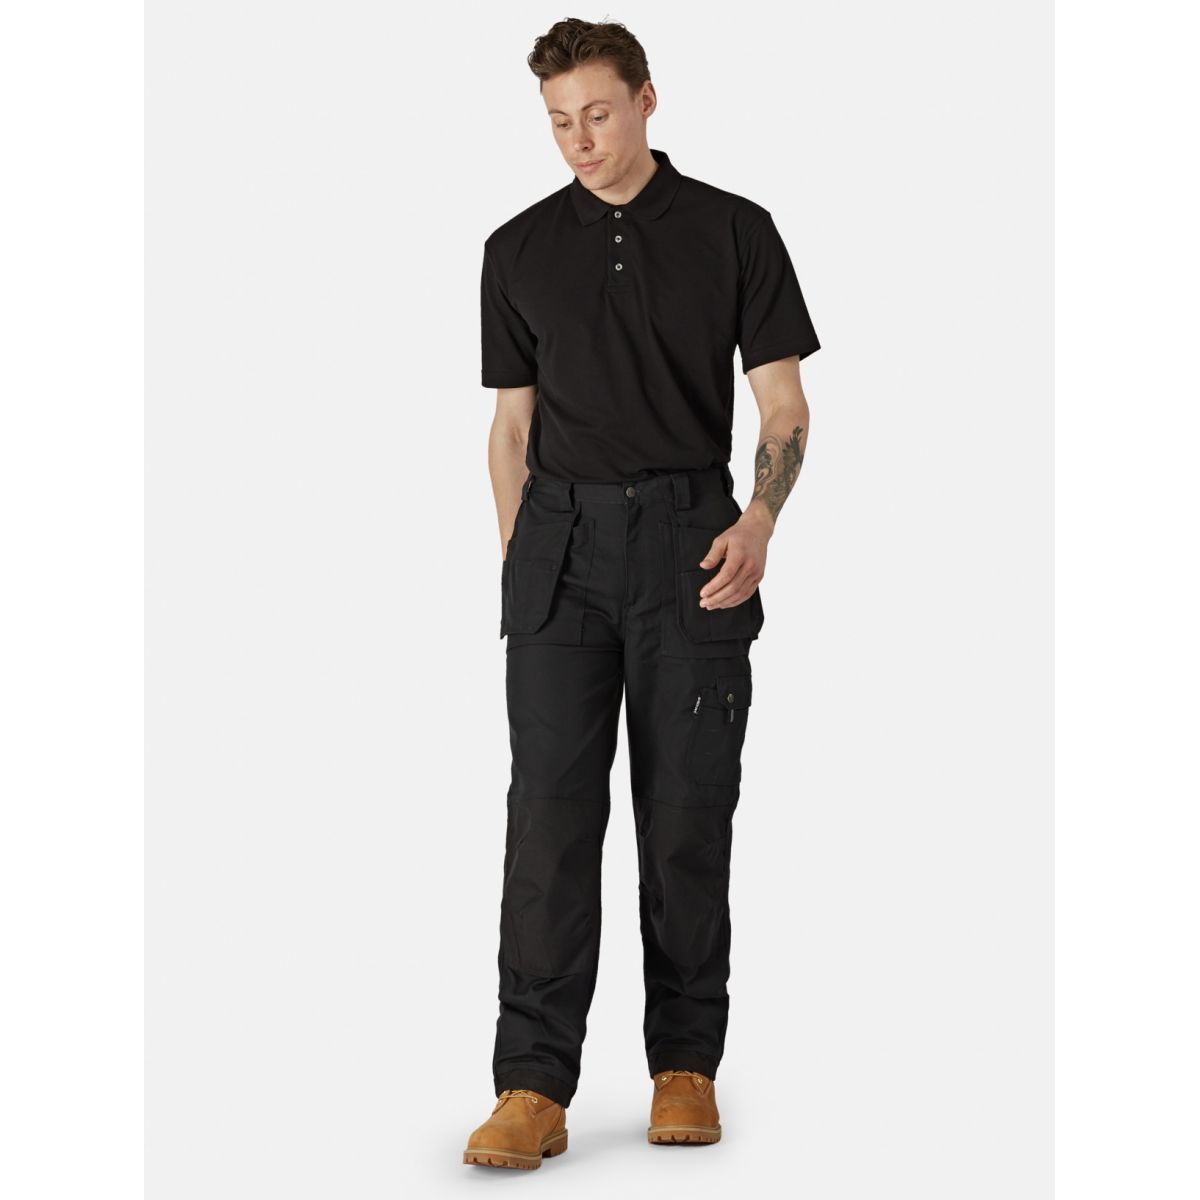 Pantalon Eisenhower multi-poches Noir - Dickies - Taille 46 2